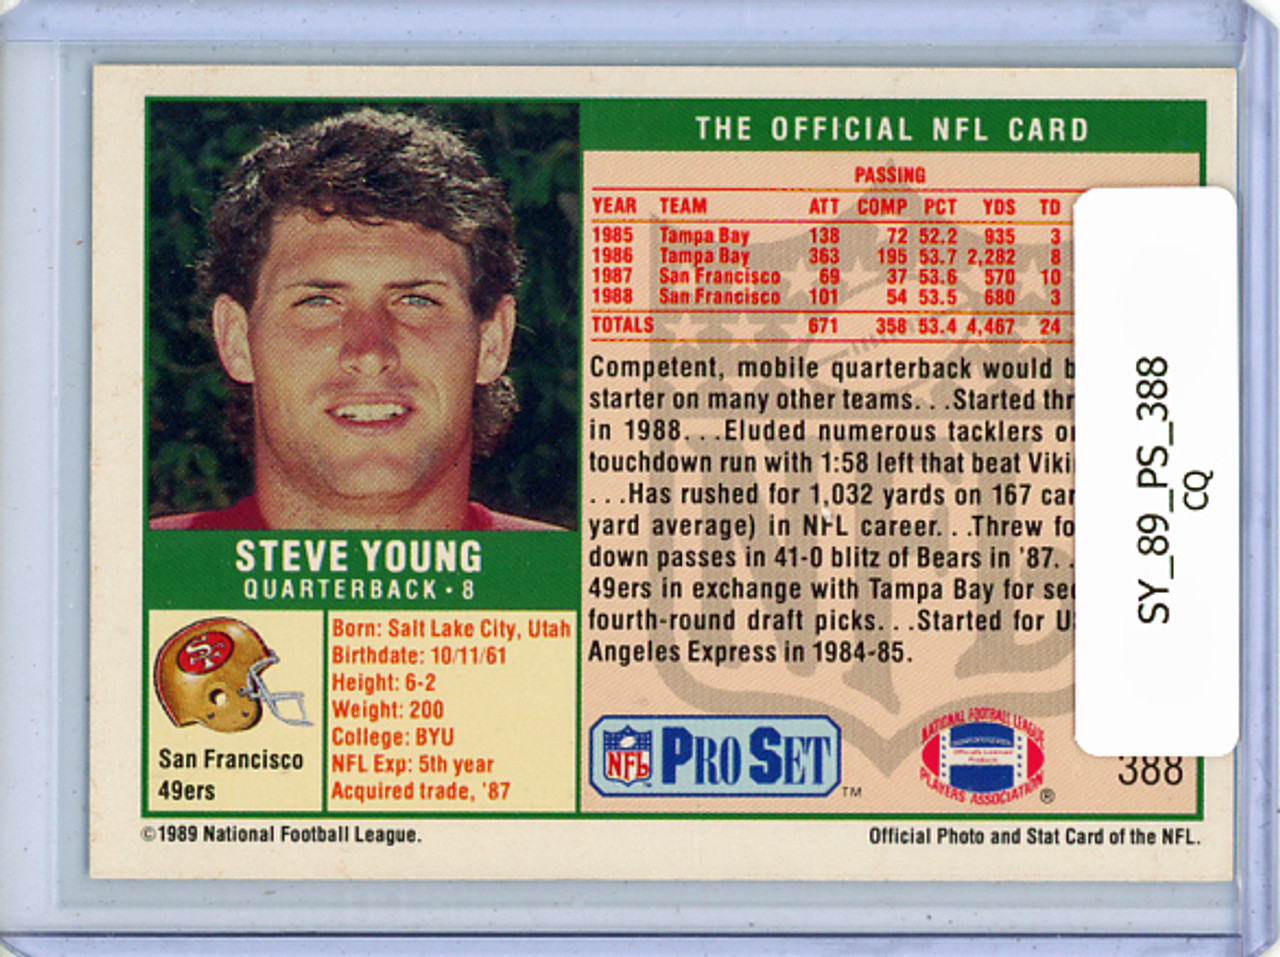 Steve Young 1989 Pro Set #388 (CQ)